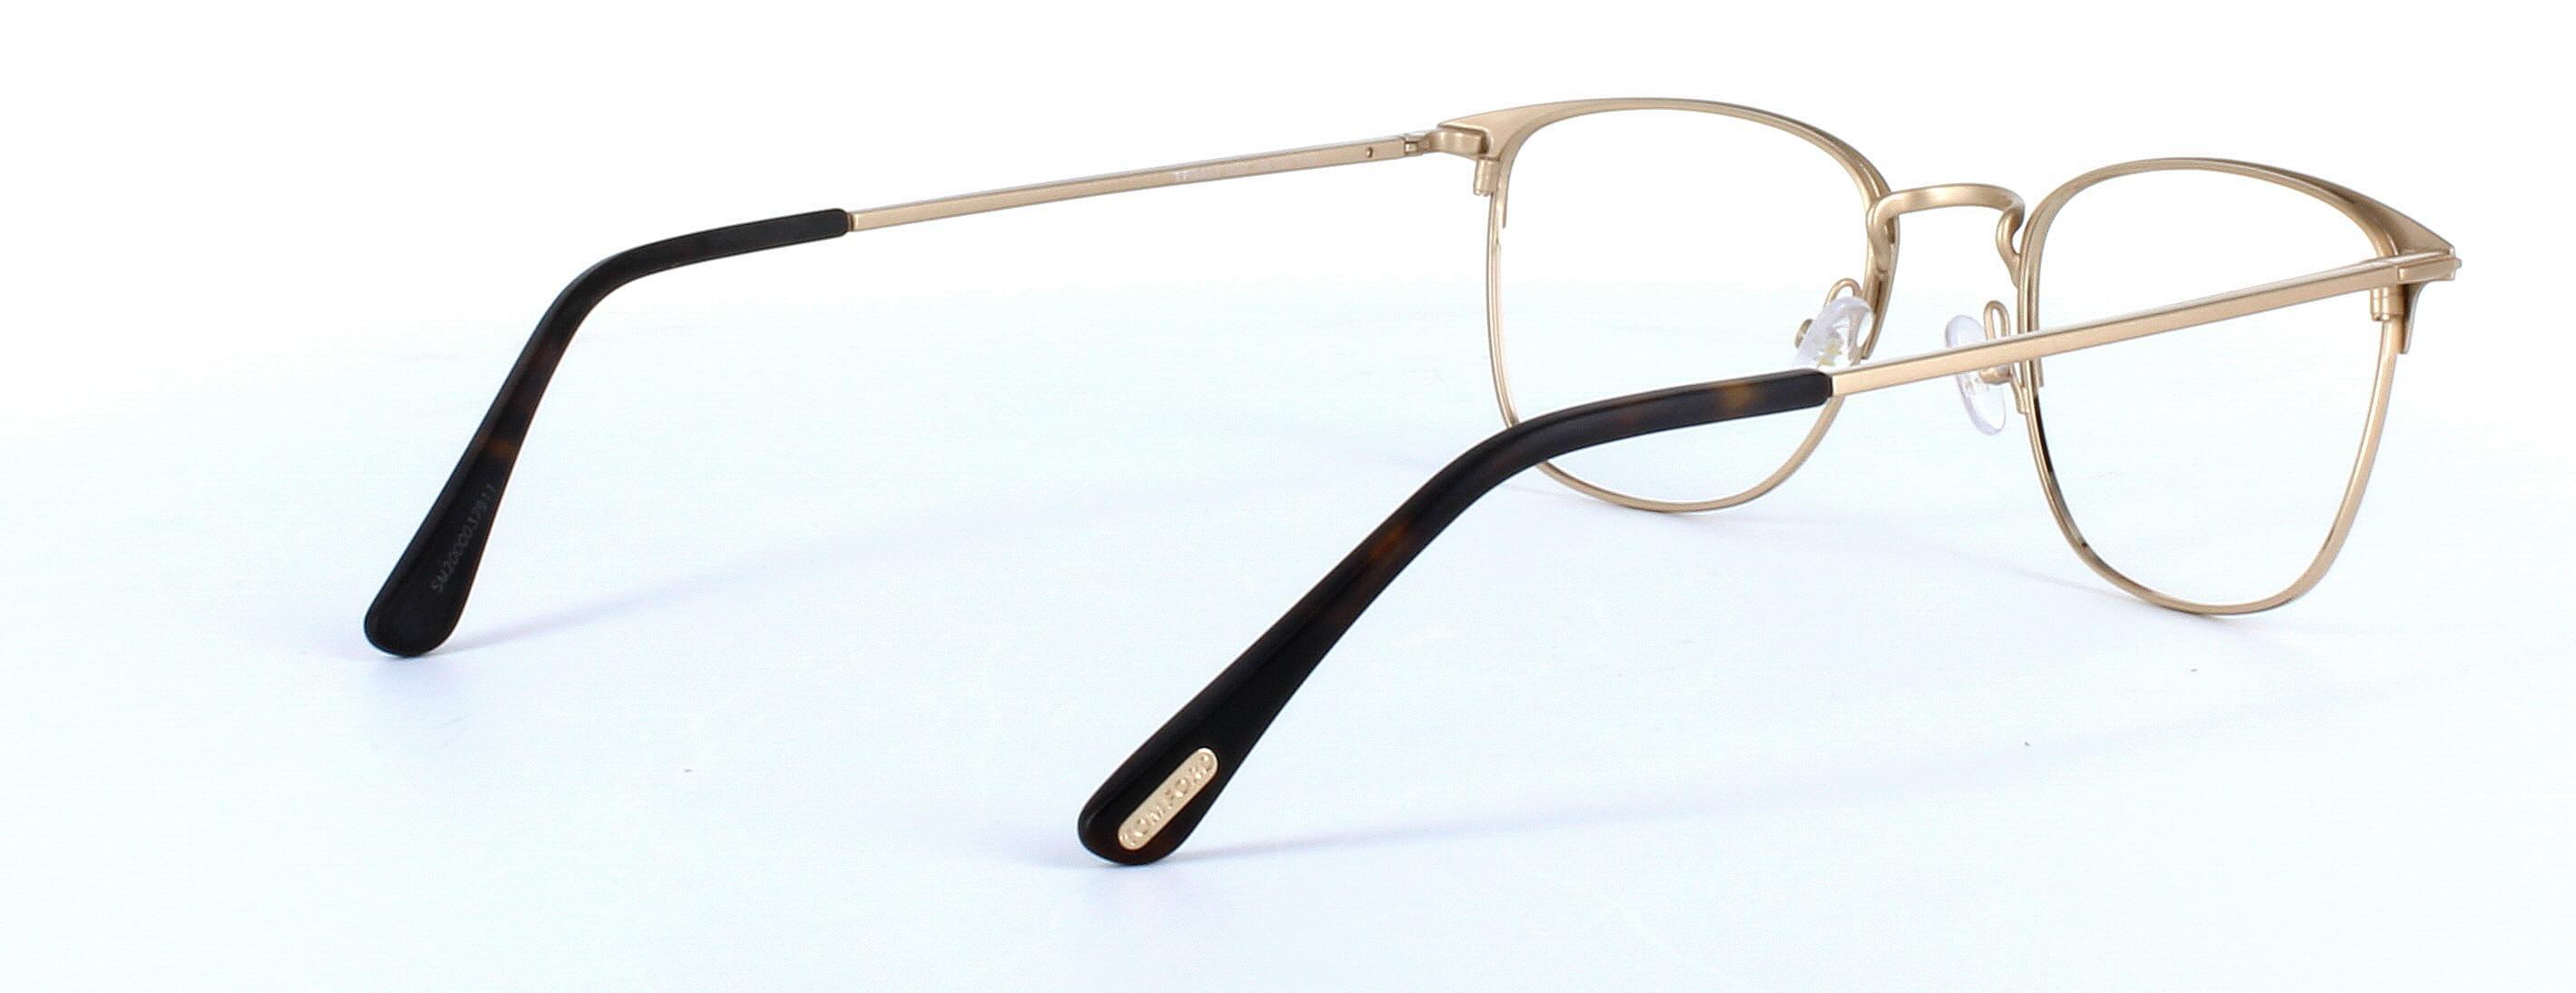 Ladies Tom Ford metal glasses - Matt gold - image 4